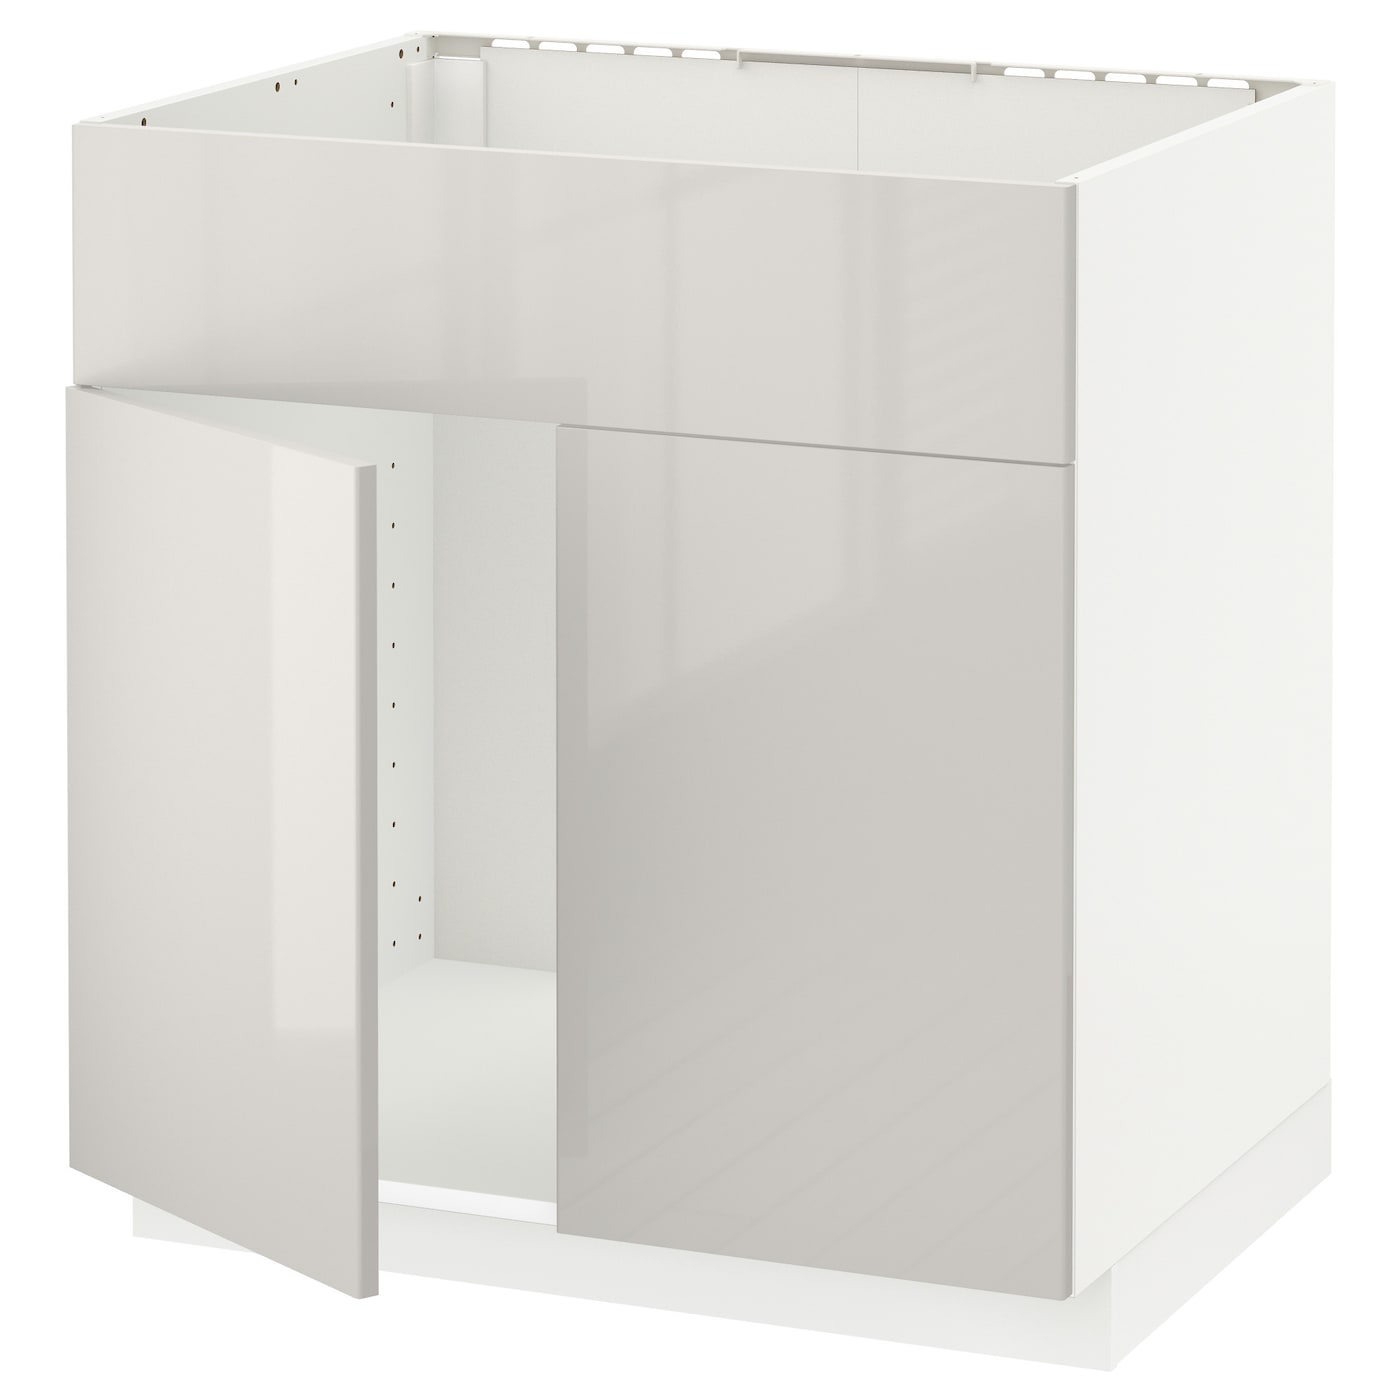 Напольный шкаф - METOD IKEA/ МЕТОД ИКЕА,  88х80 см, белый/светло-серый